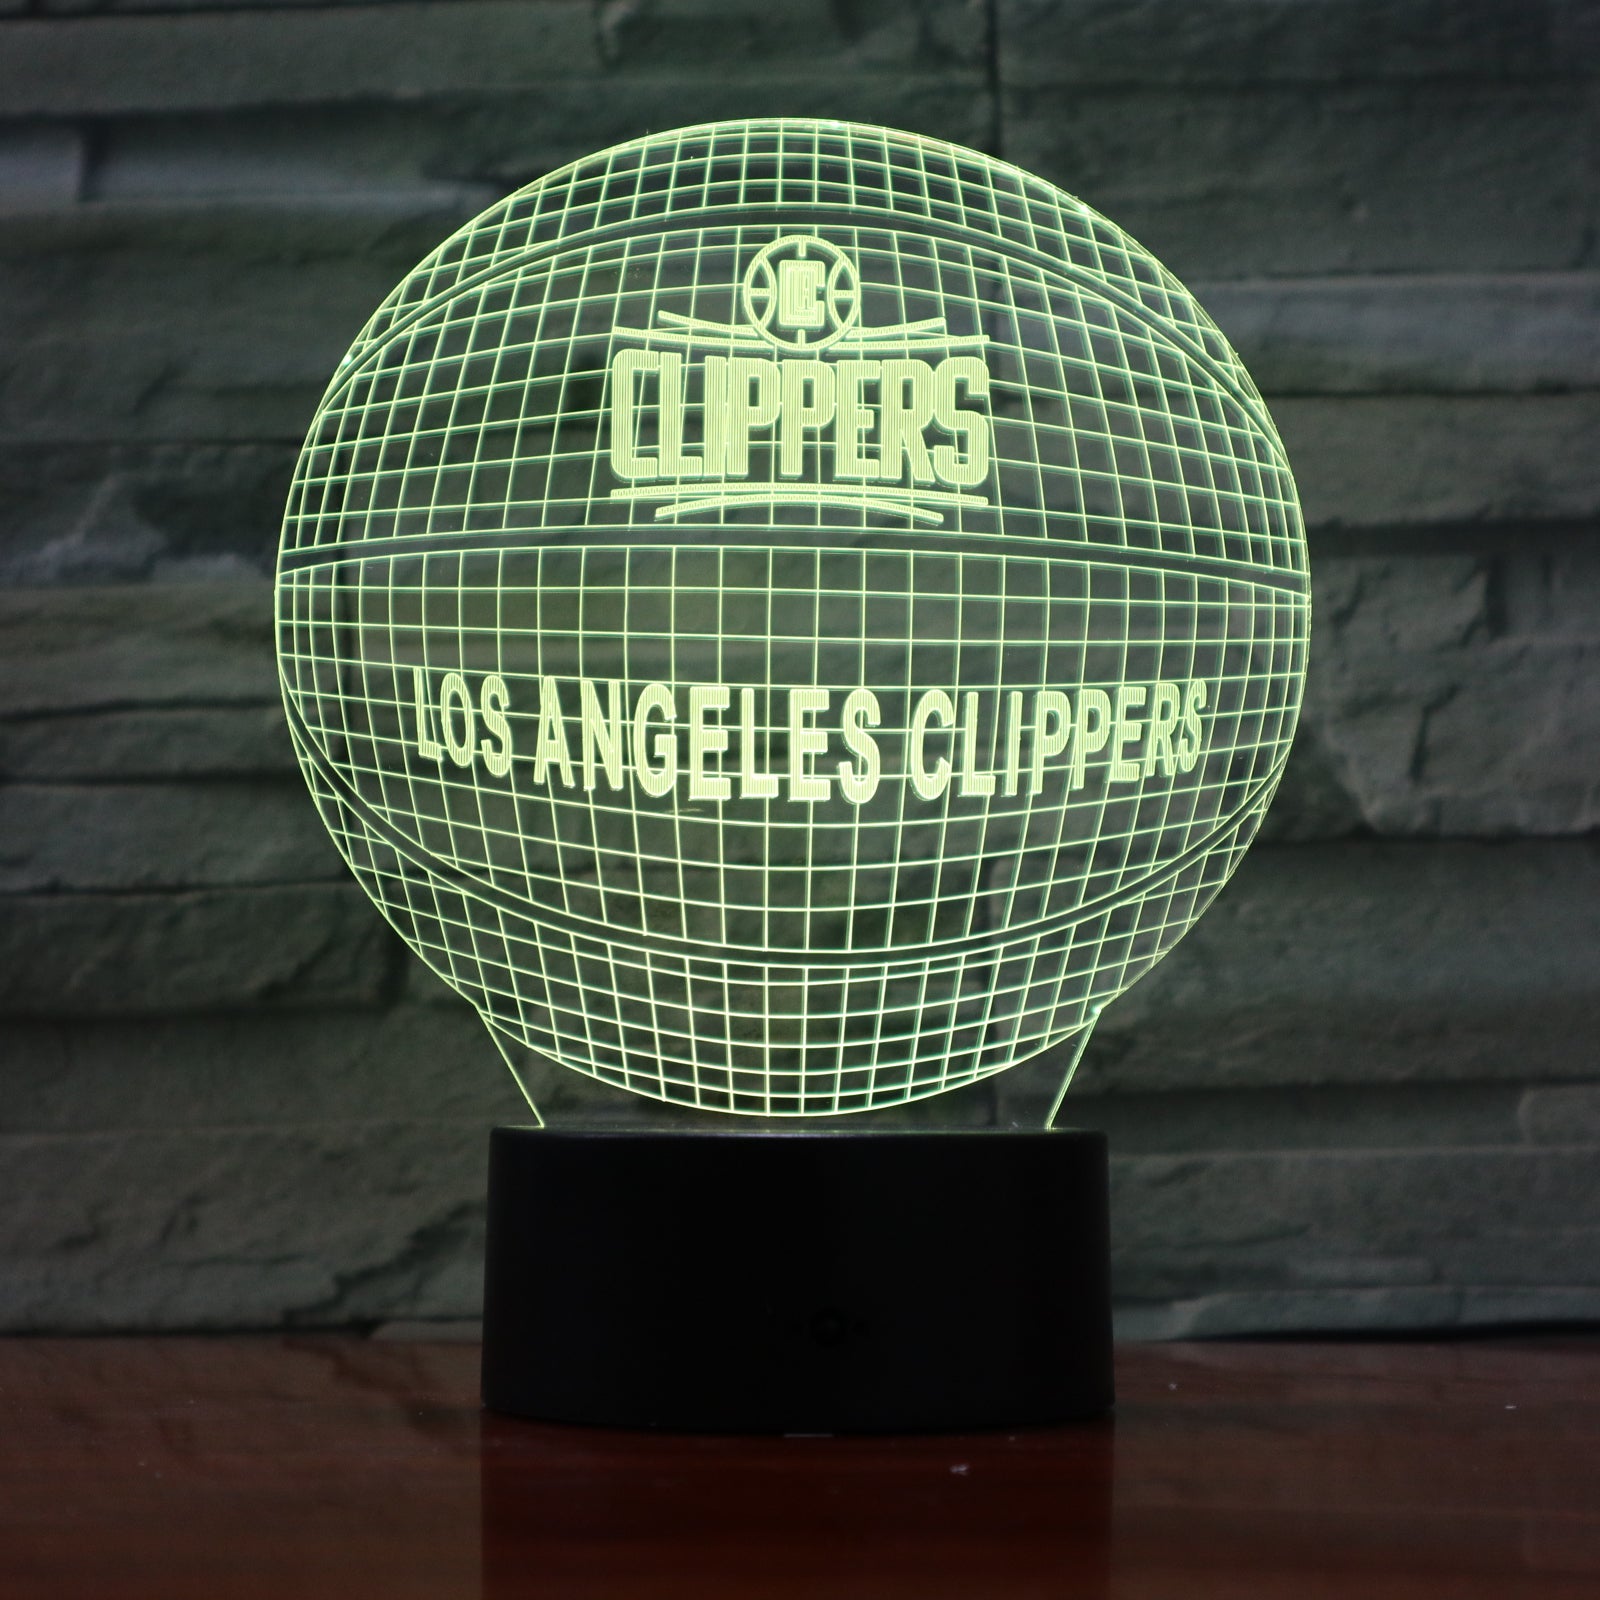 Basketball 2 - 3D Optical Illusion LED Lamp Hologram